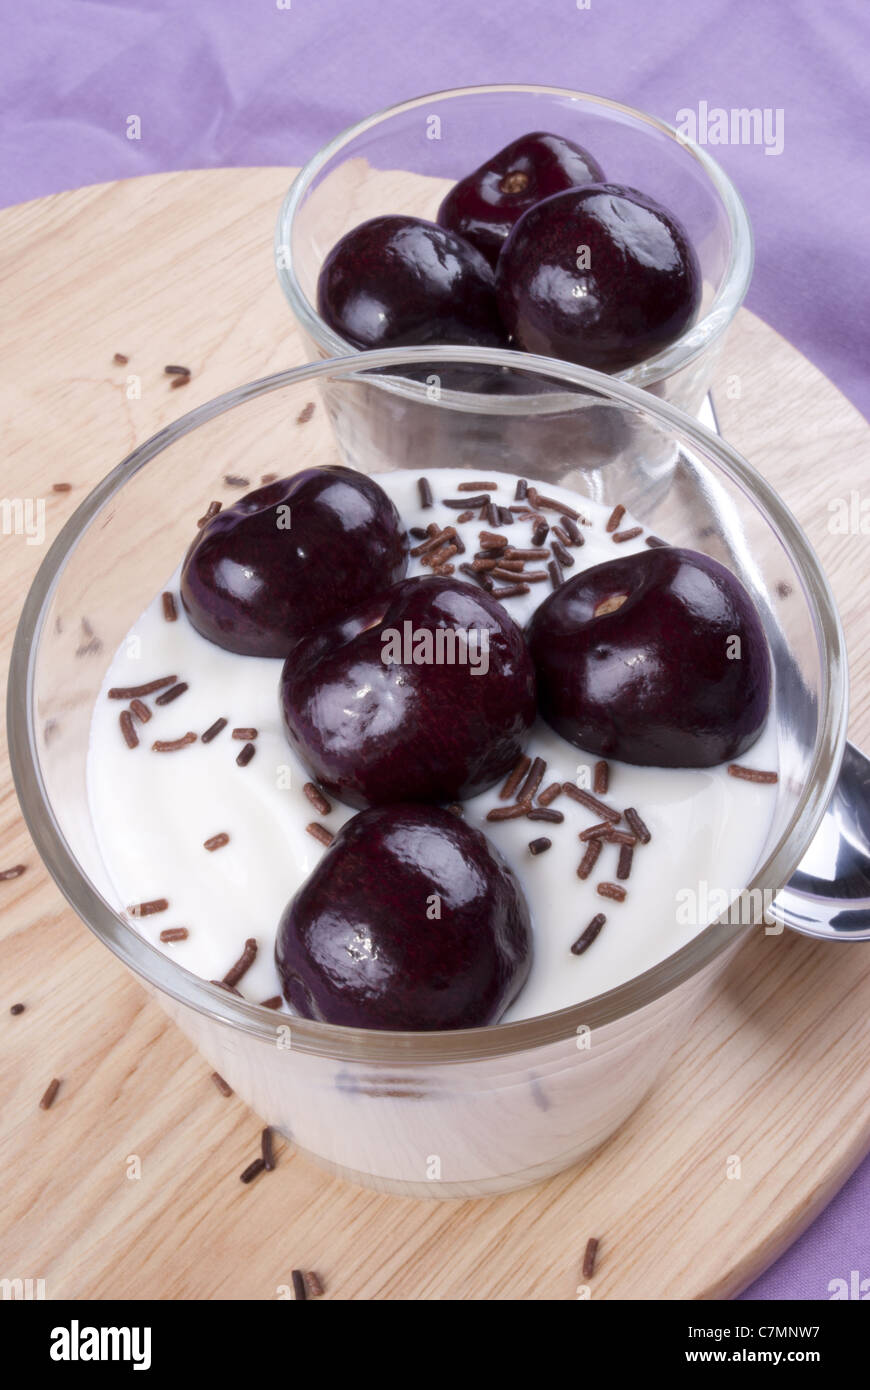 yogurt with fresh sweet cherries and chocolate sprinkles Stock Photo